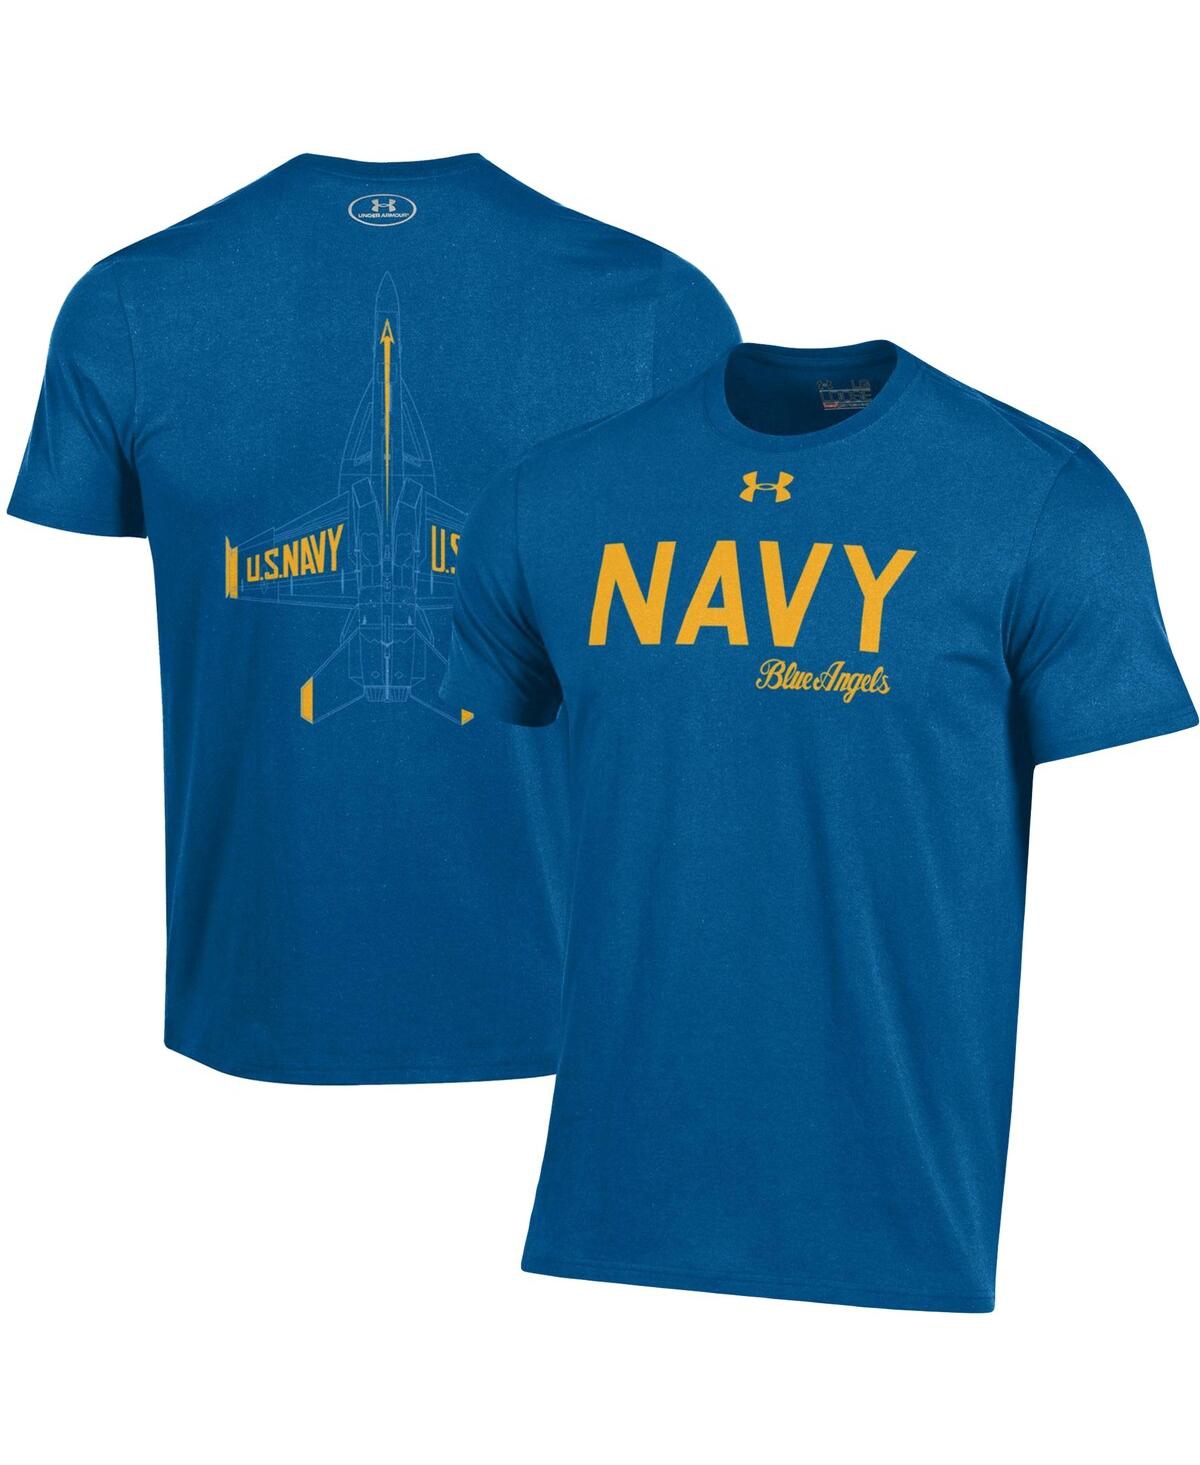 Under Armour Men's  Royal Navy Midshipmen Blue Angels T-shirt